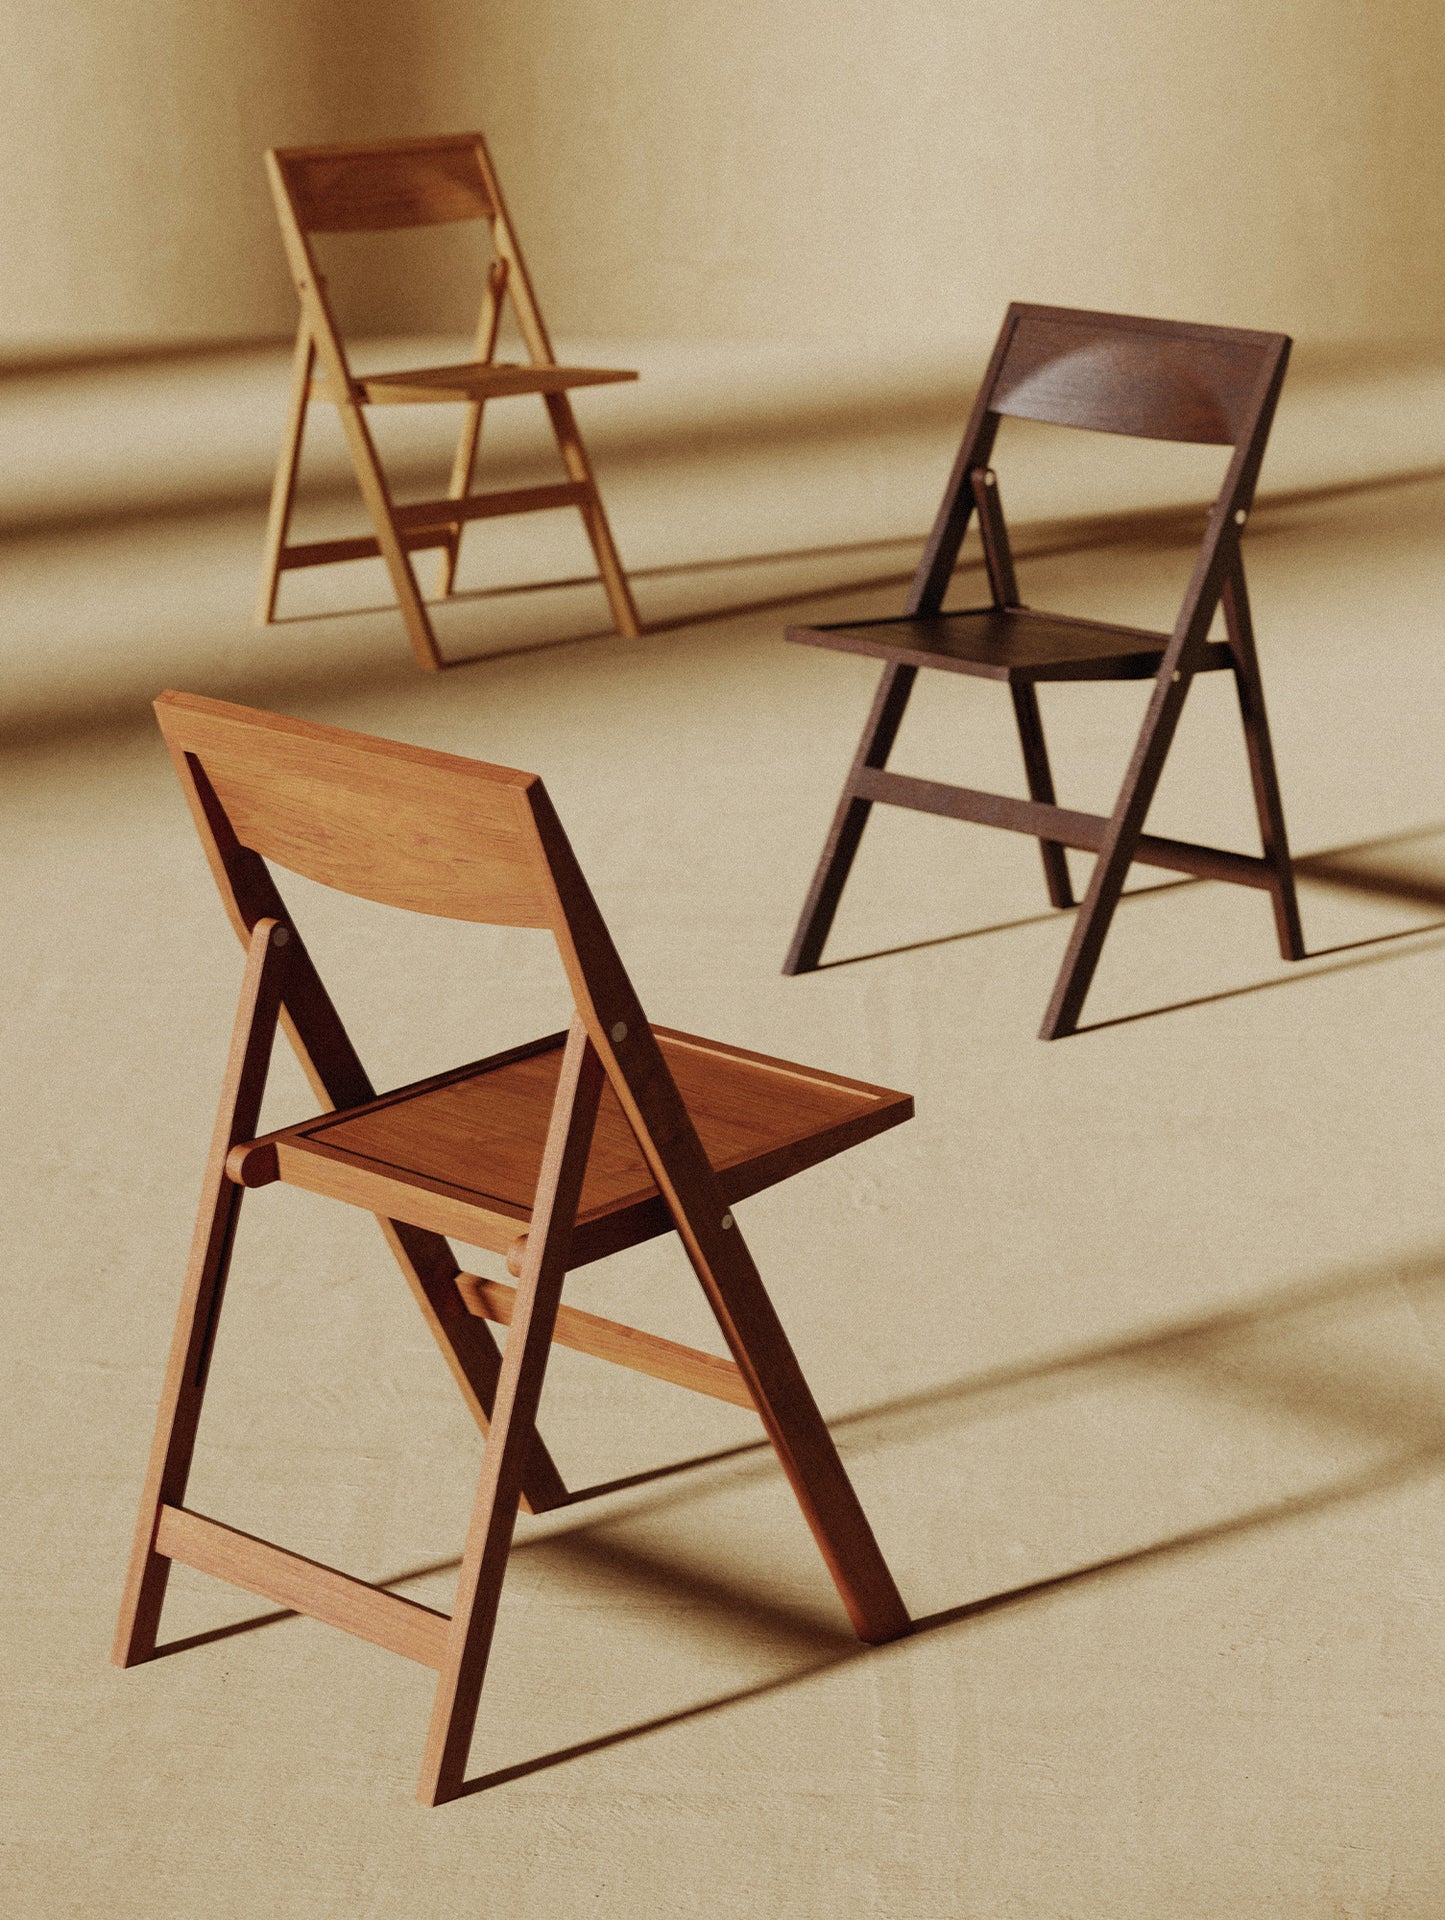 Folding Flat Chair by Frama